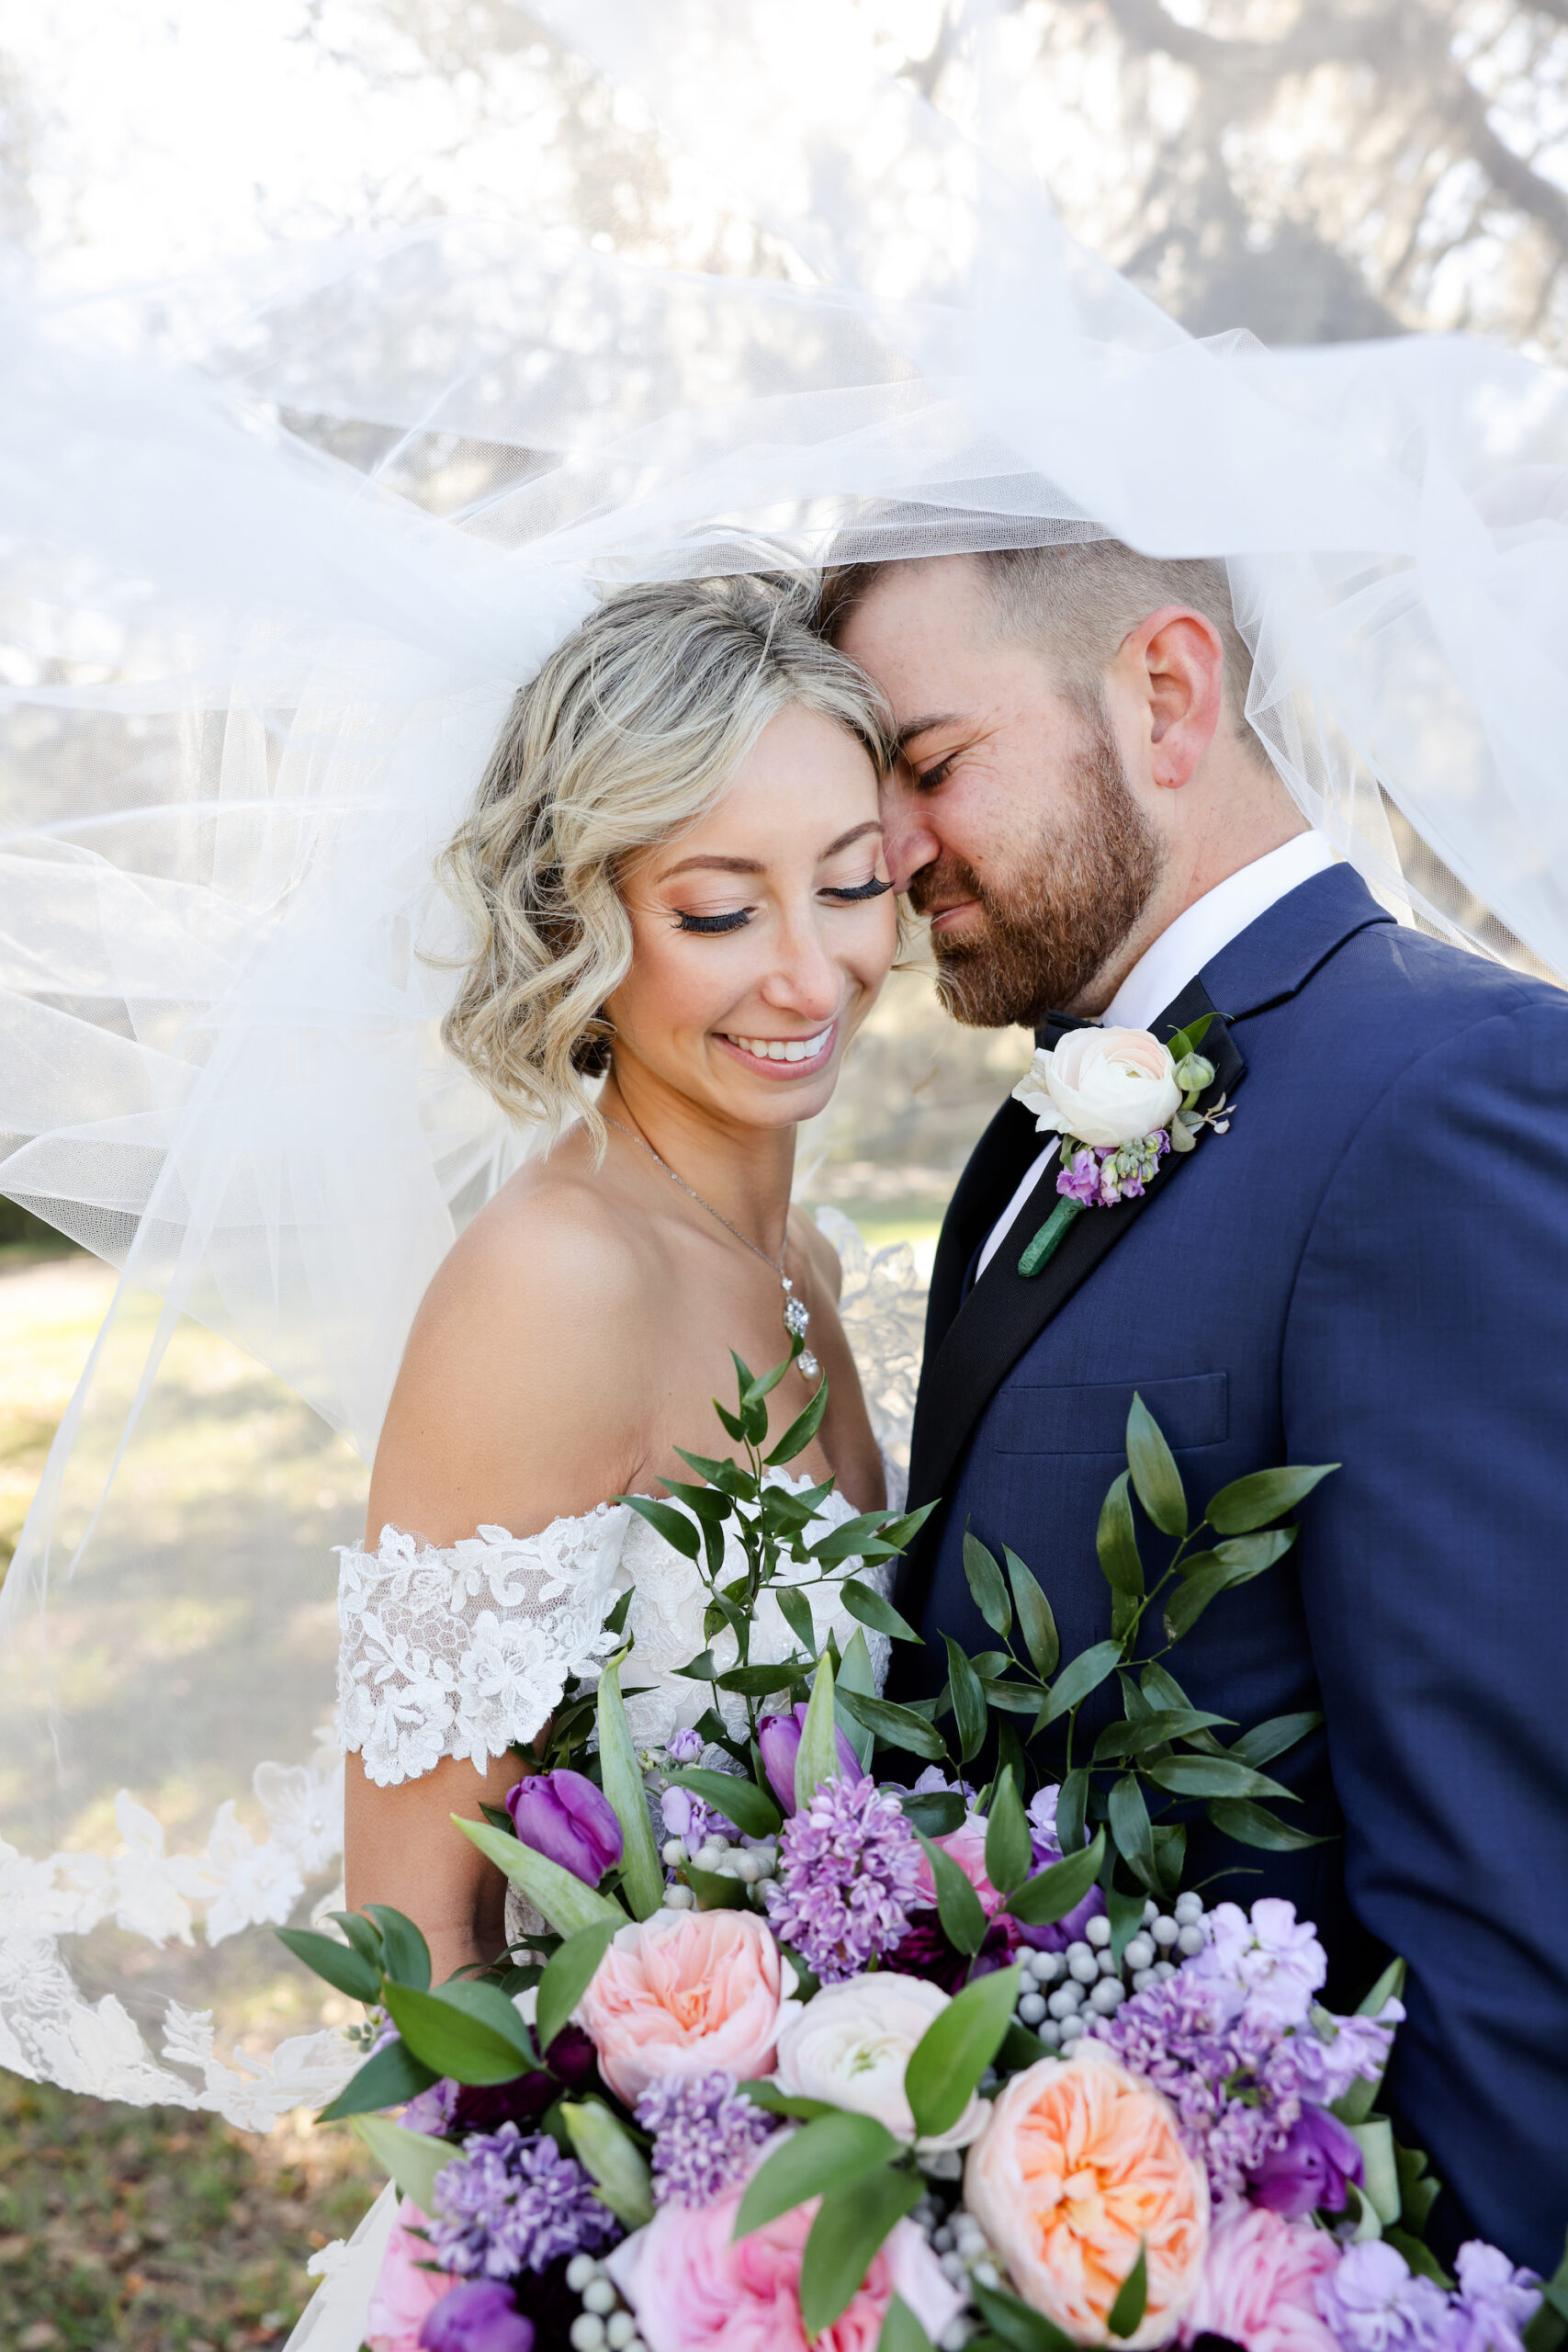 Romantic Bride and Groom Veil Wedding Portrait | Tampa Bay Photographer Lifelong Photography